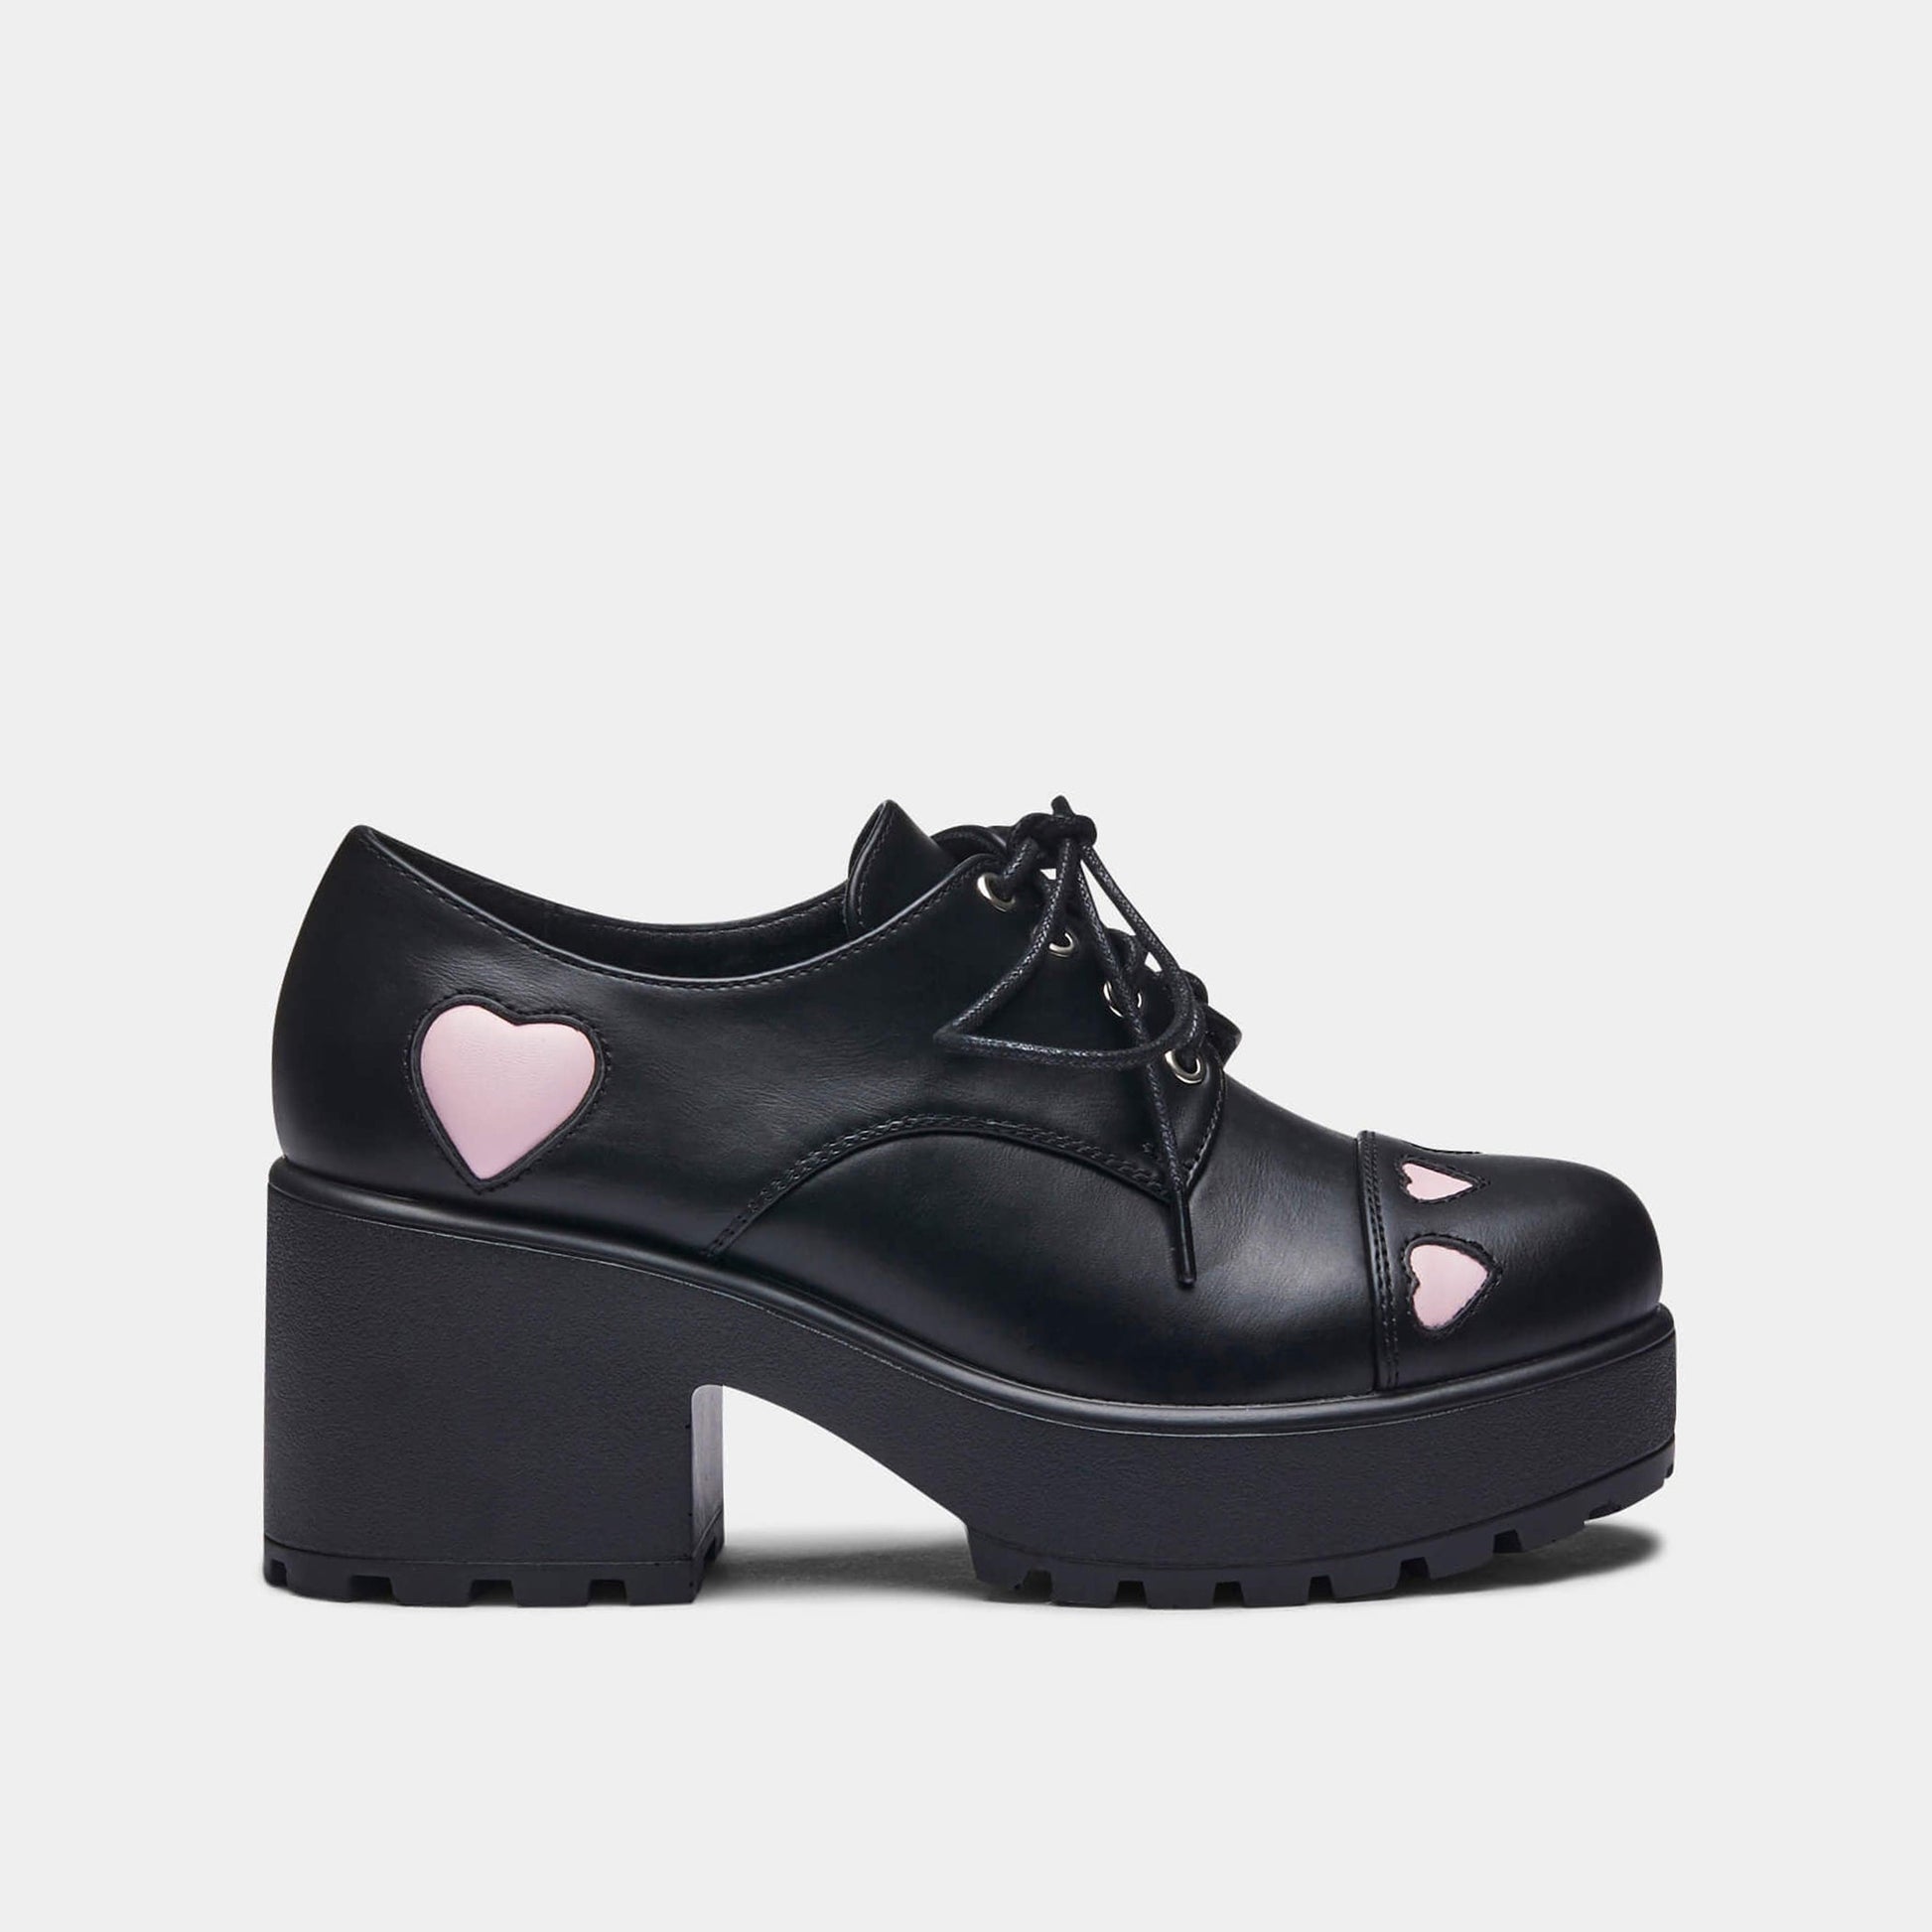 Tennin Heart Shoes - Shoes - KOI Footwear - Black - Side View